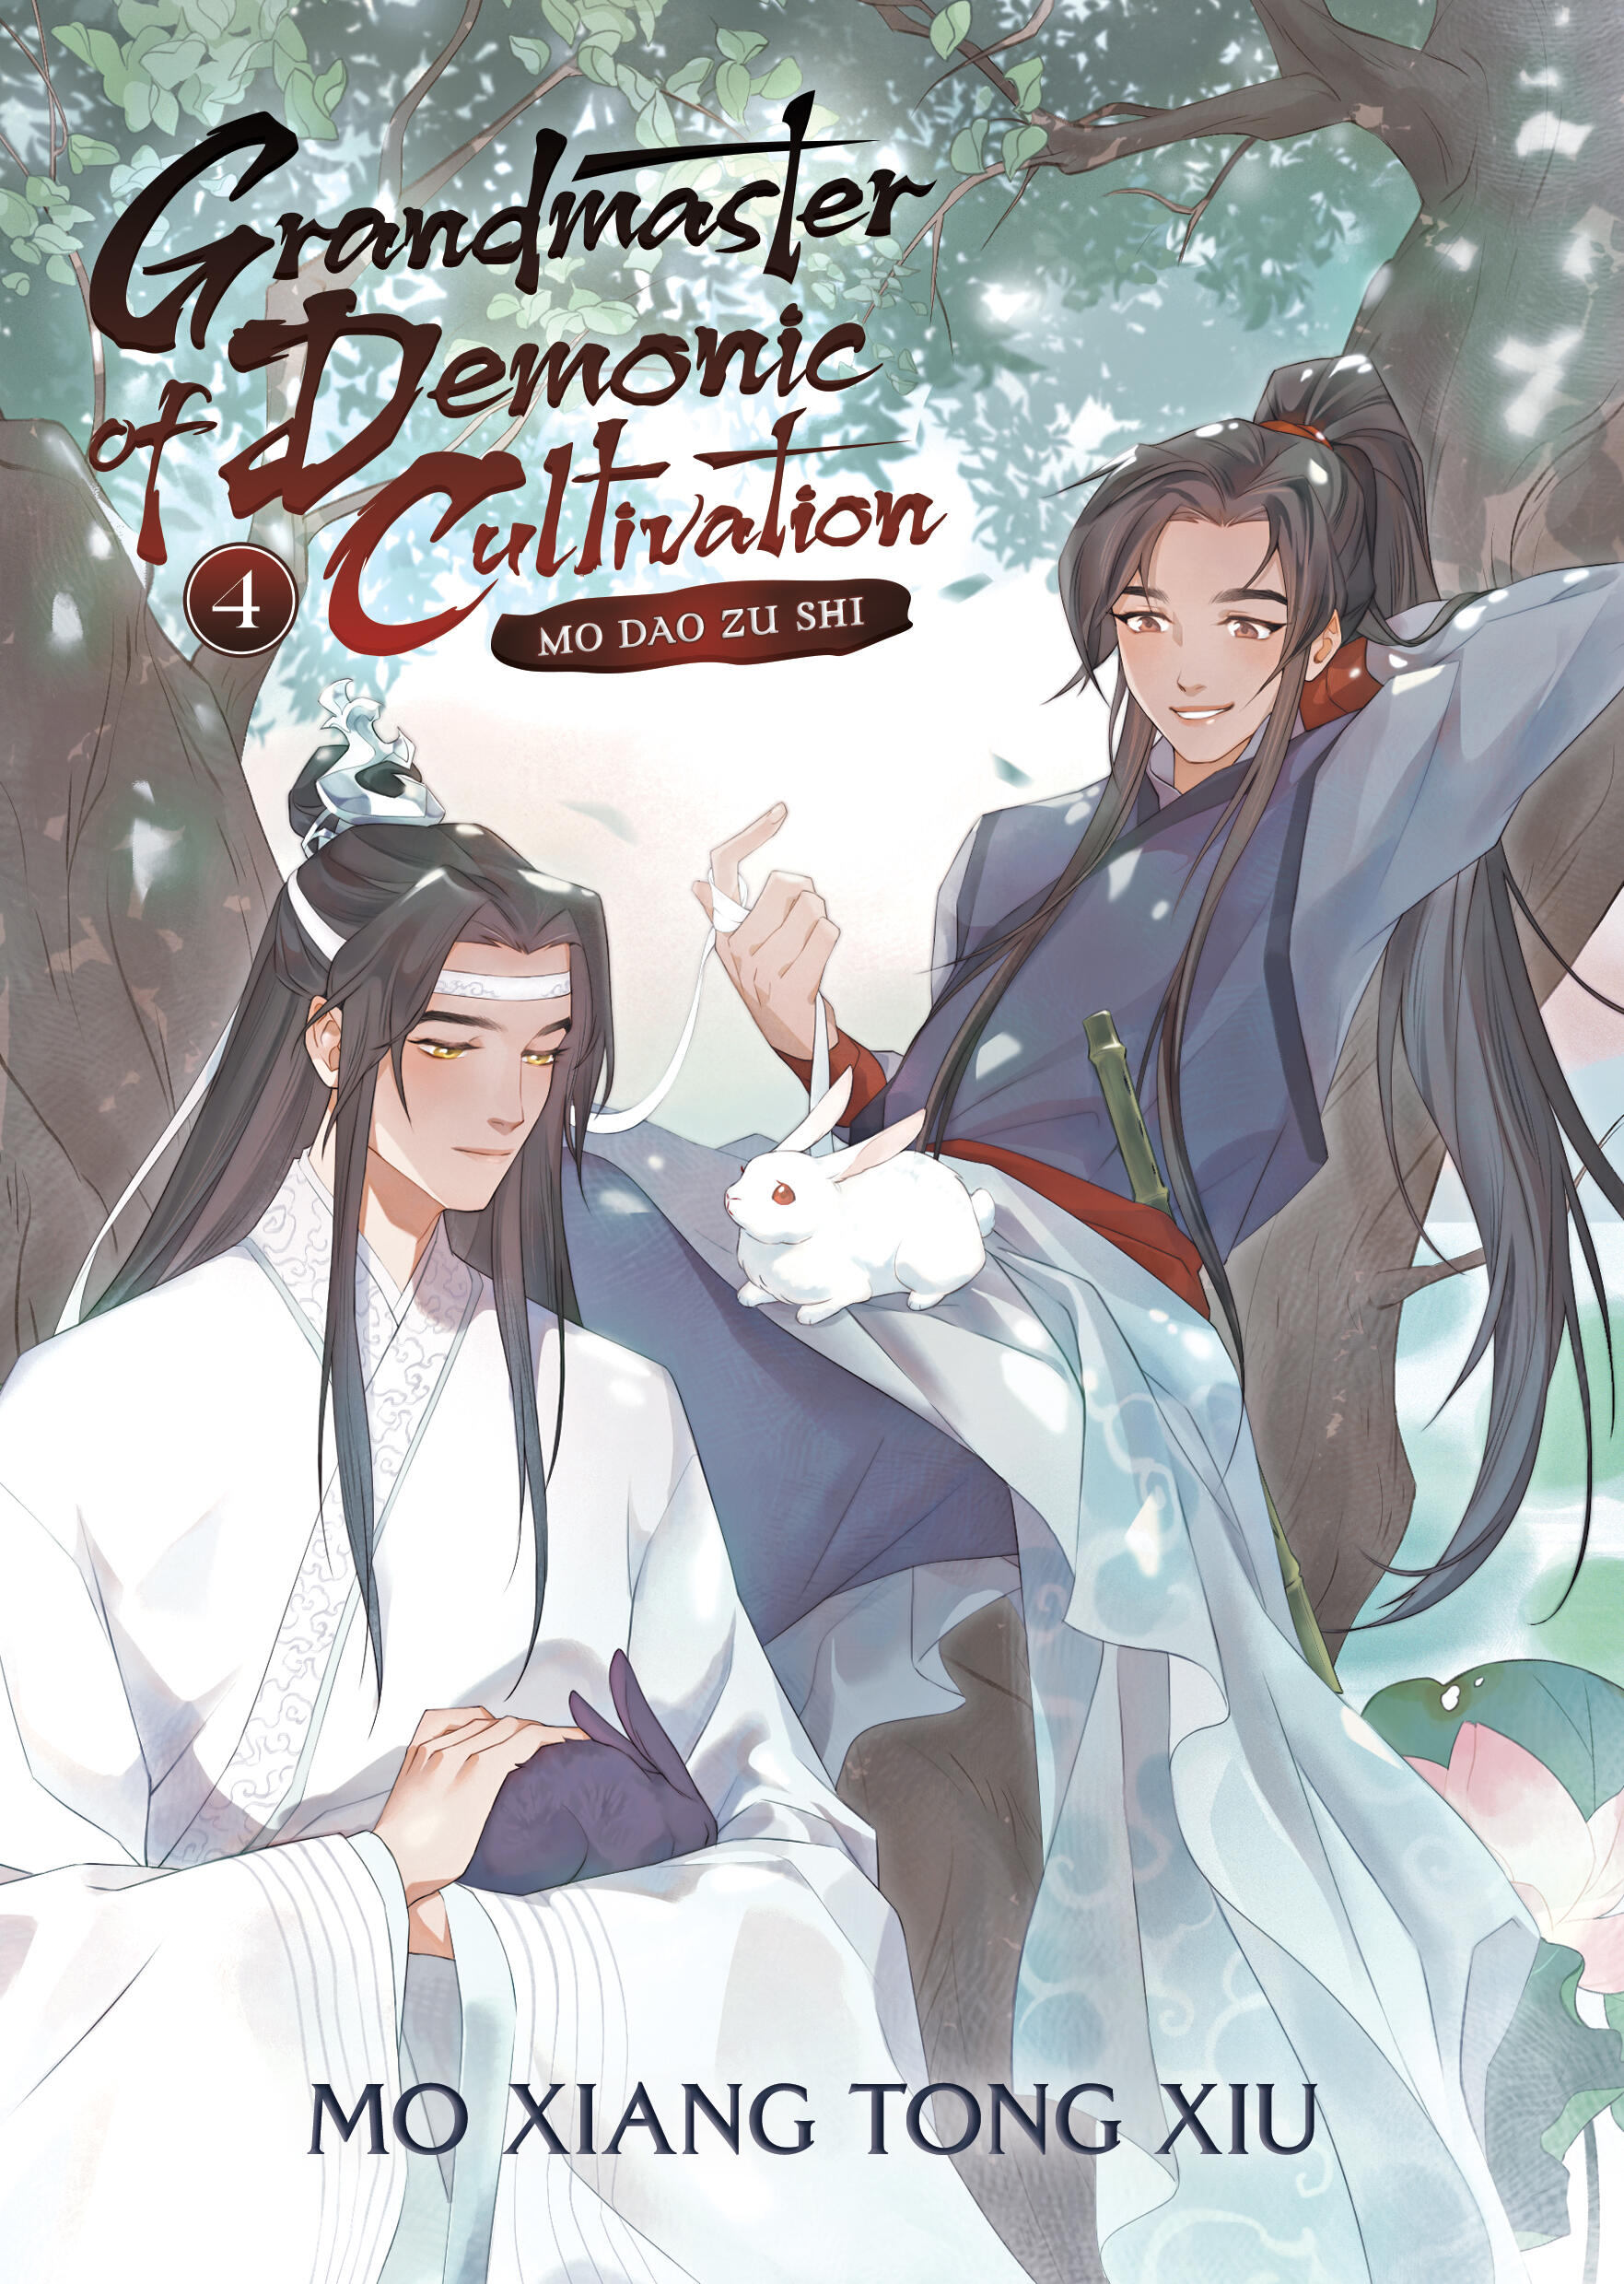 Grandmaster of Demonic Cultivation Vol. 04 (Paperback)- Mo Xiang Tong Xiu